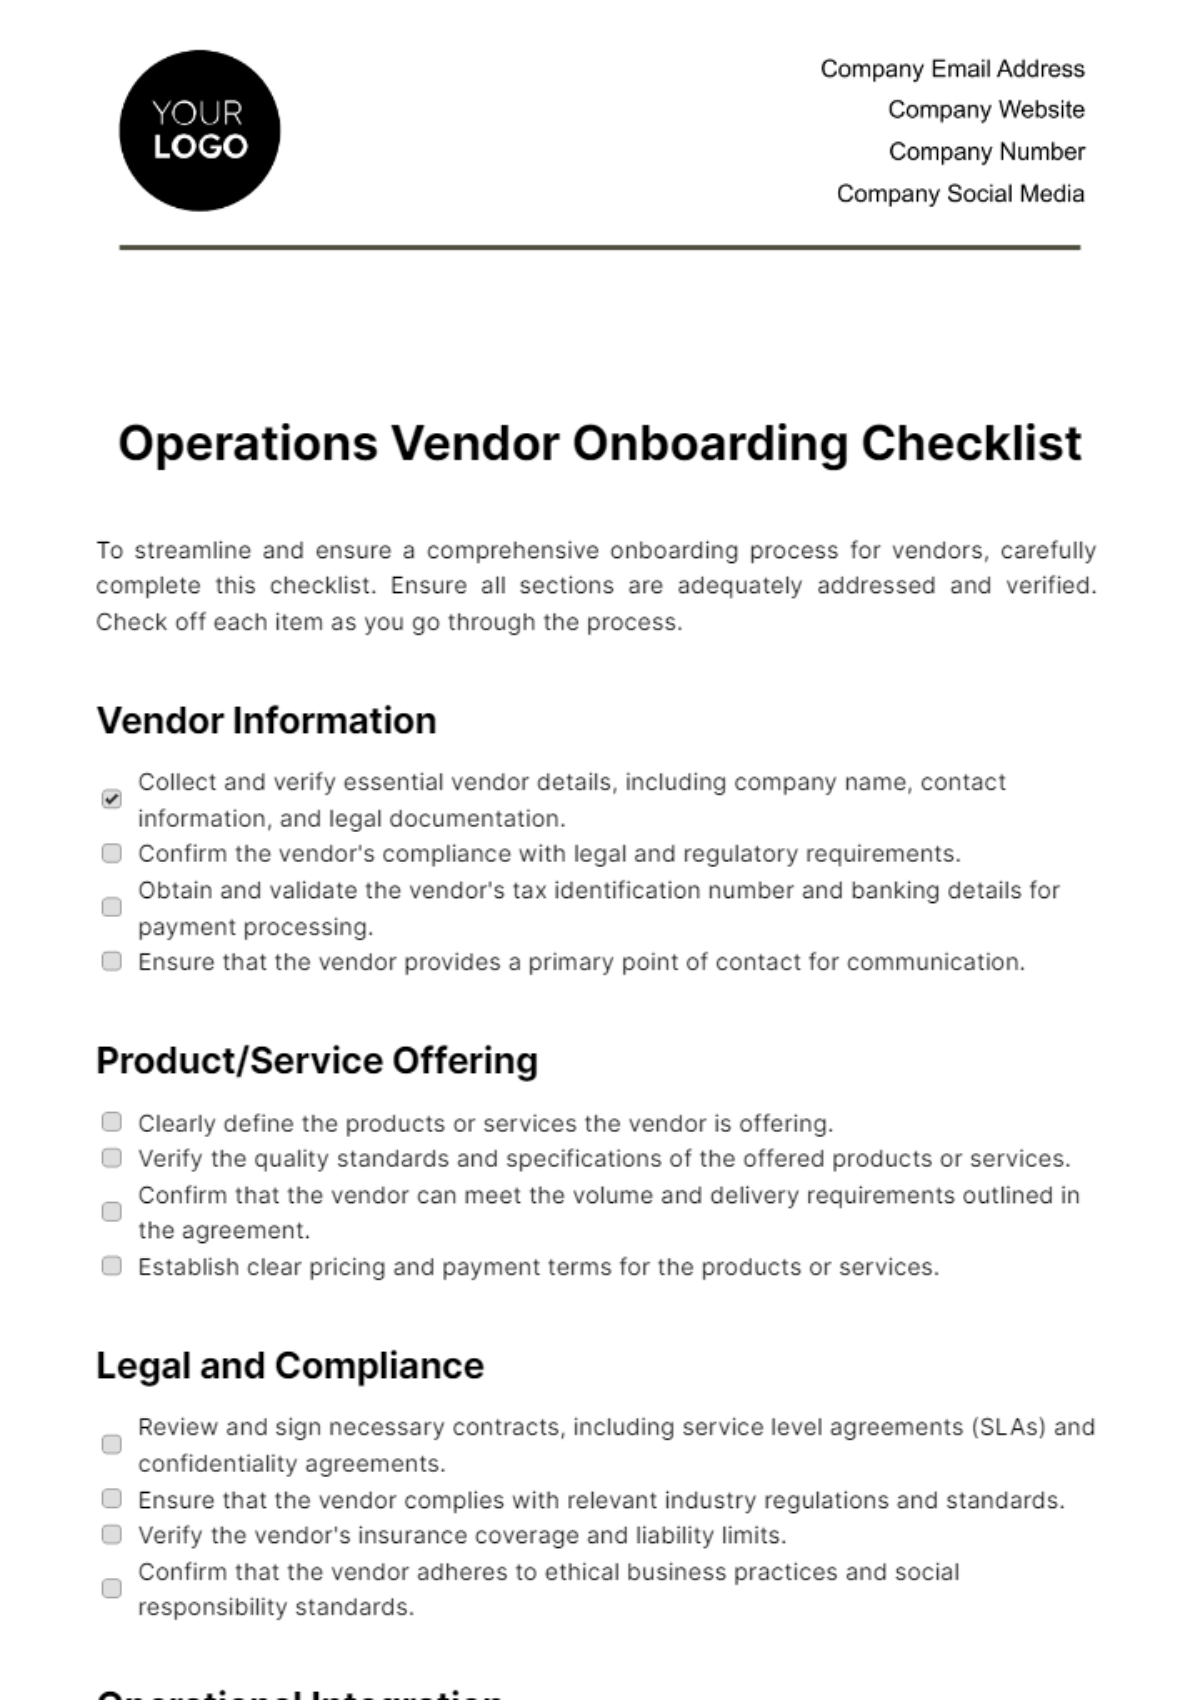 Operations Vendor Onboarding Checklist Template